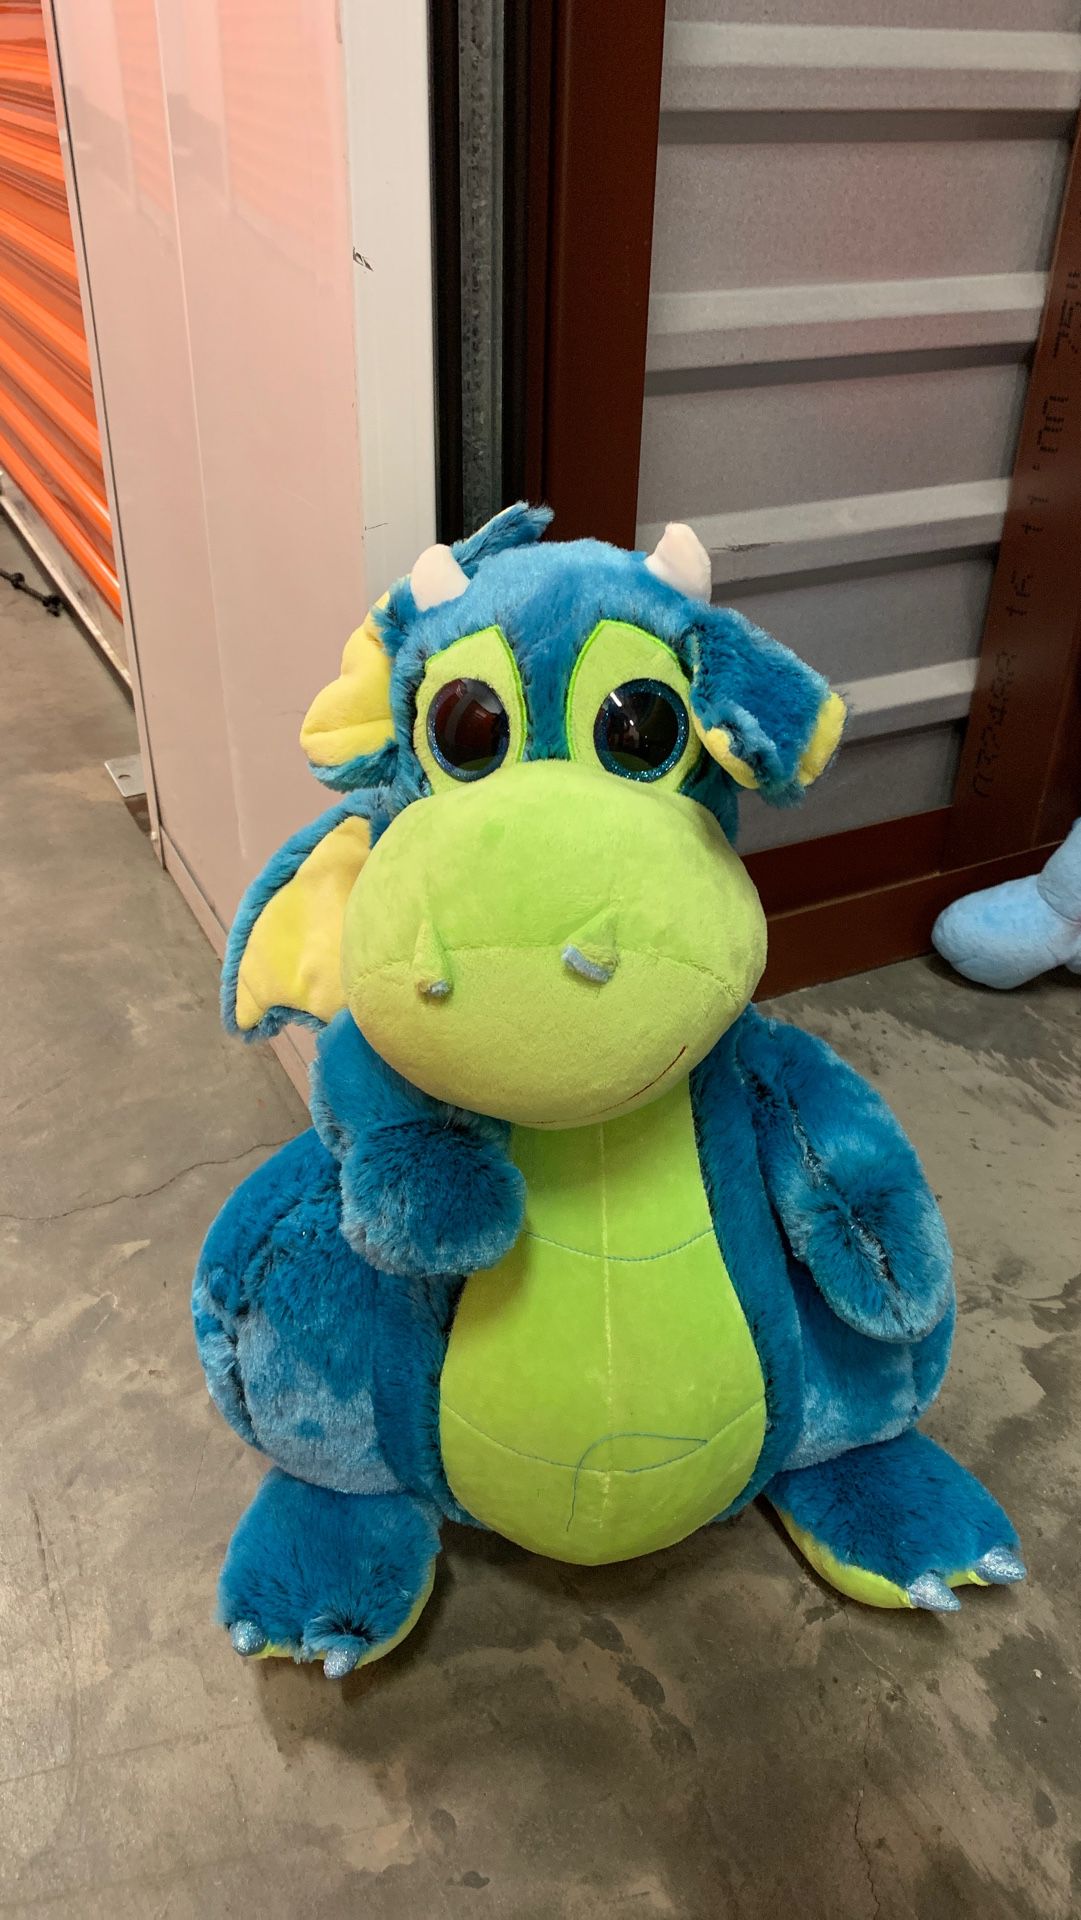 Giant Dragon stuffed animal